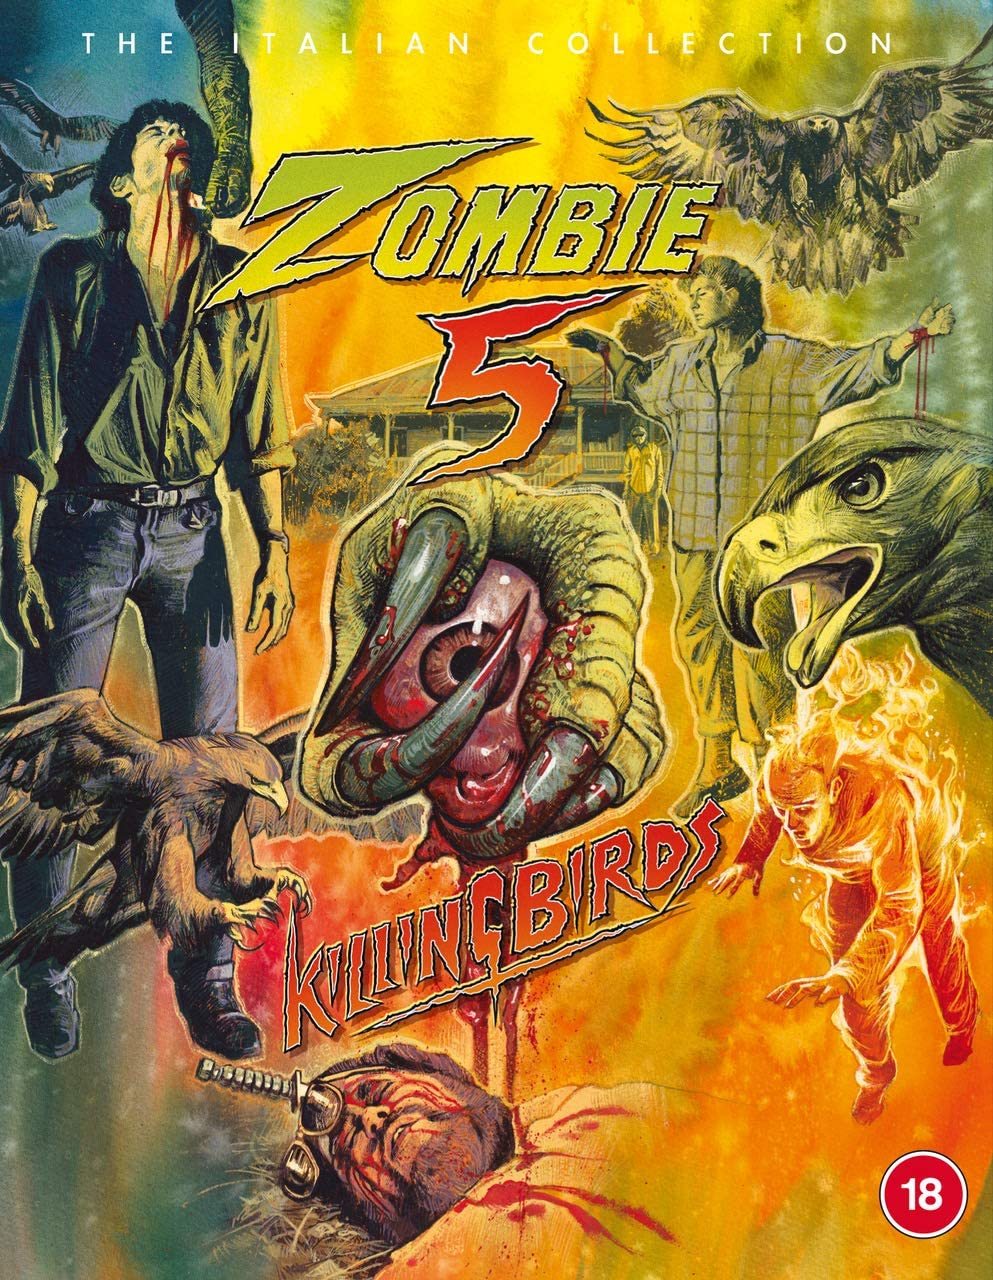 Zombie 5: Killing Birds (Limited Edition - Region Free Import) Blu-Ray Blu-Ray